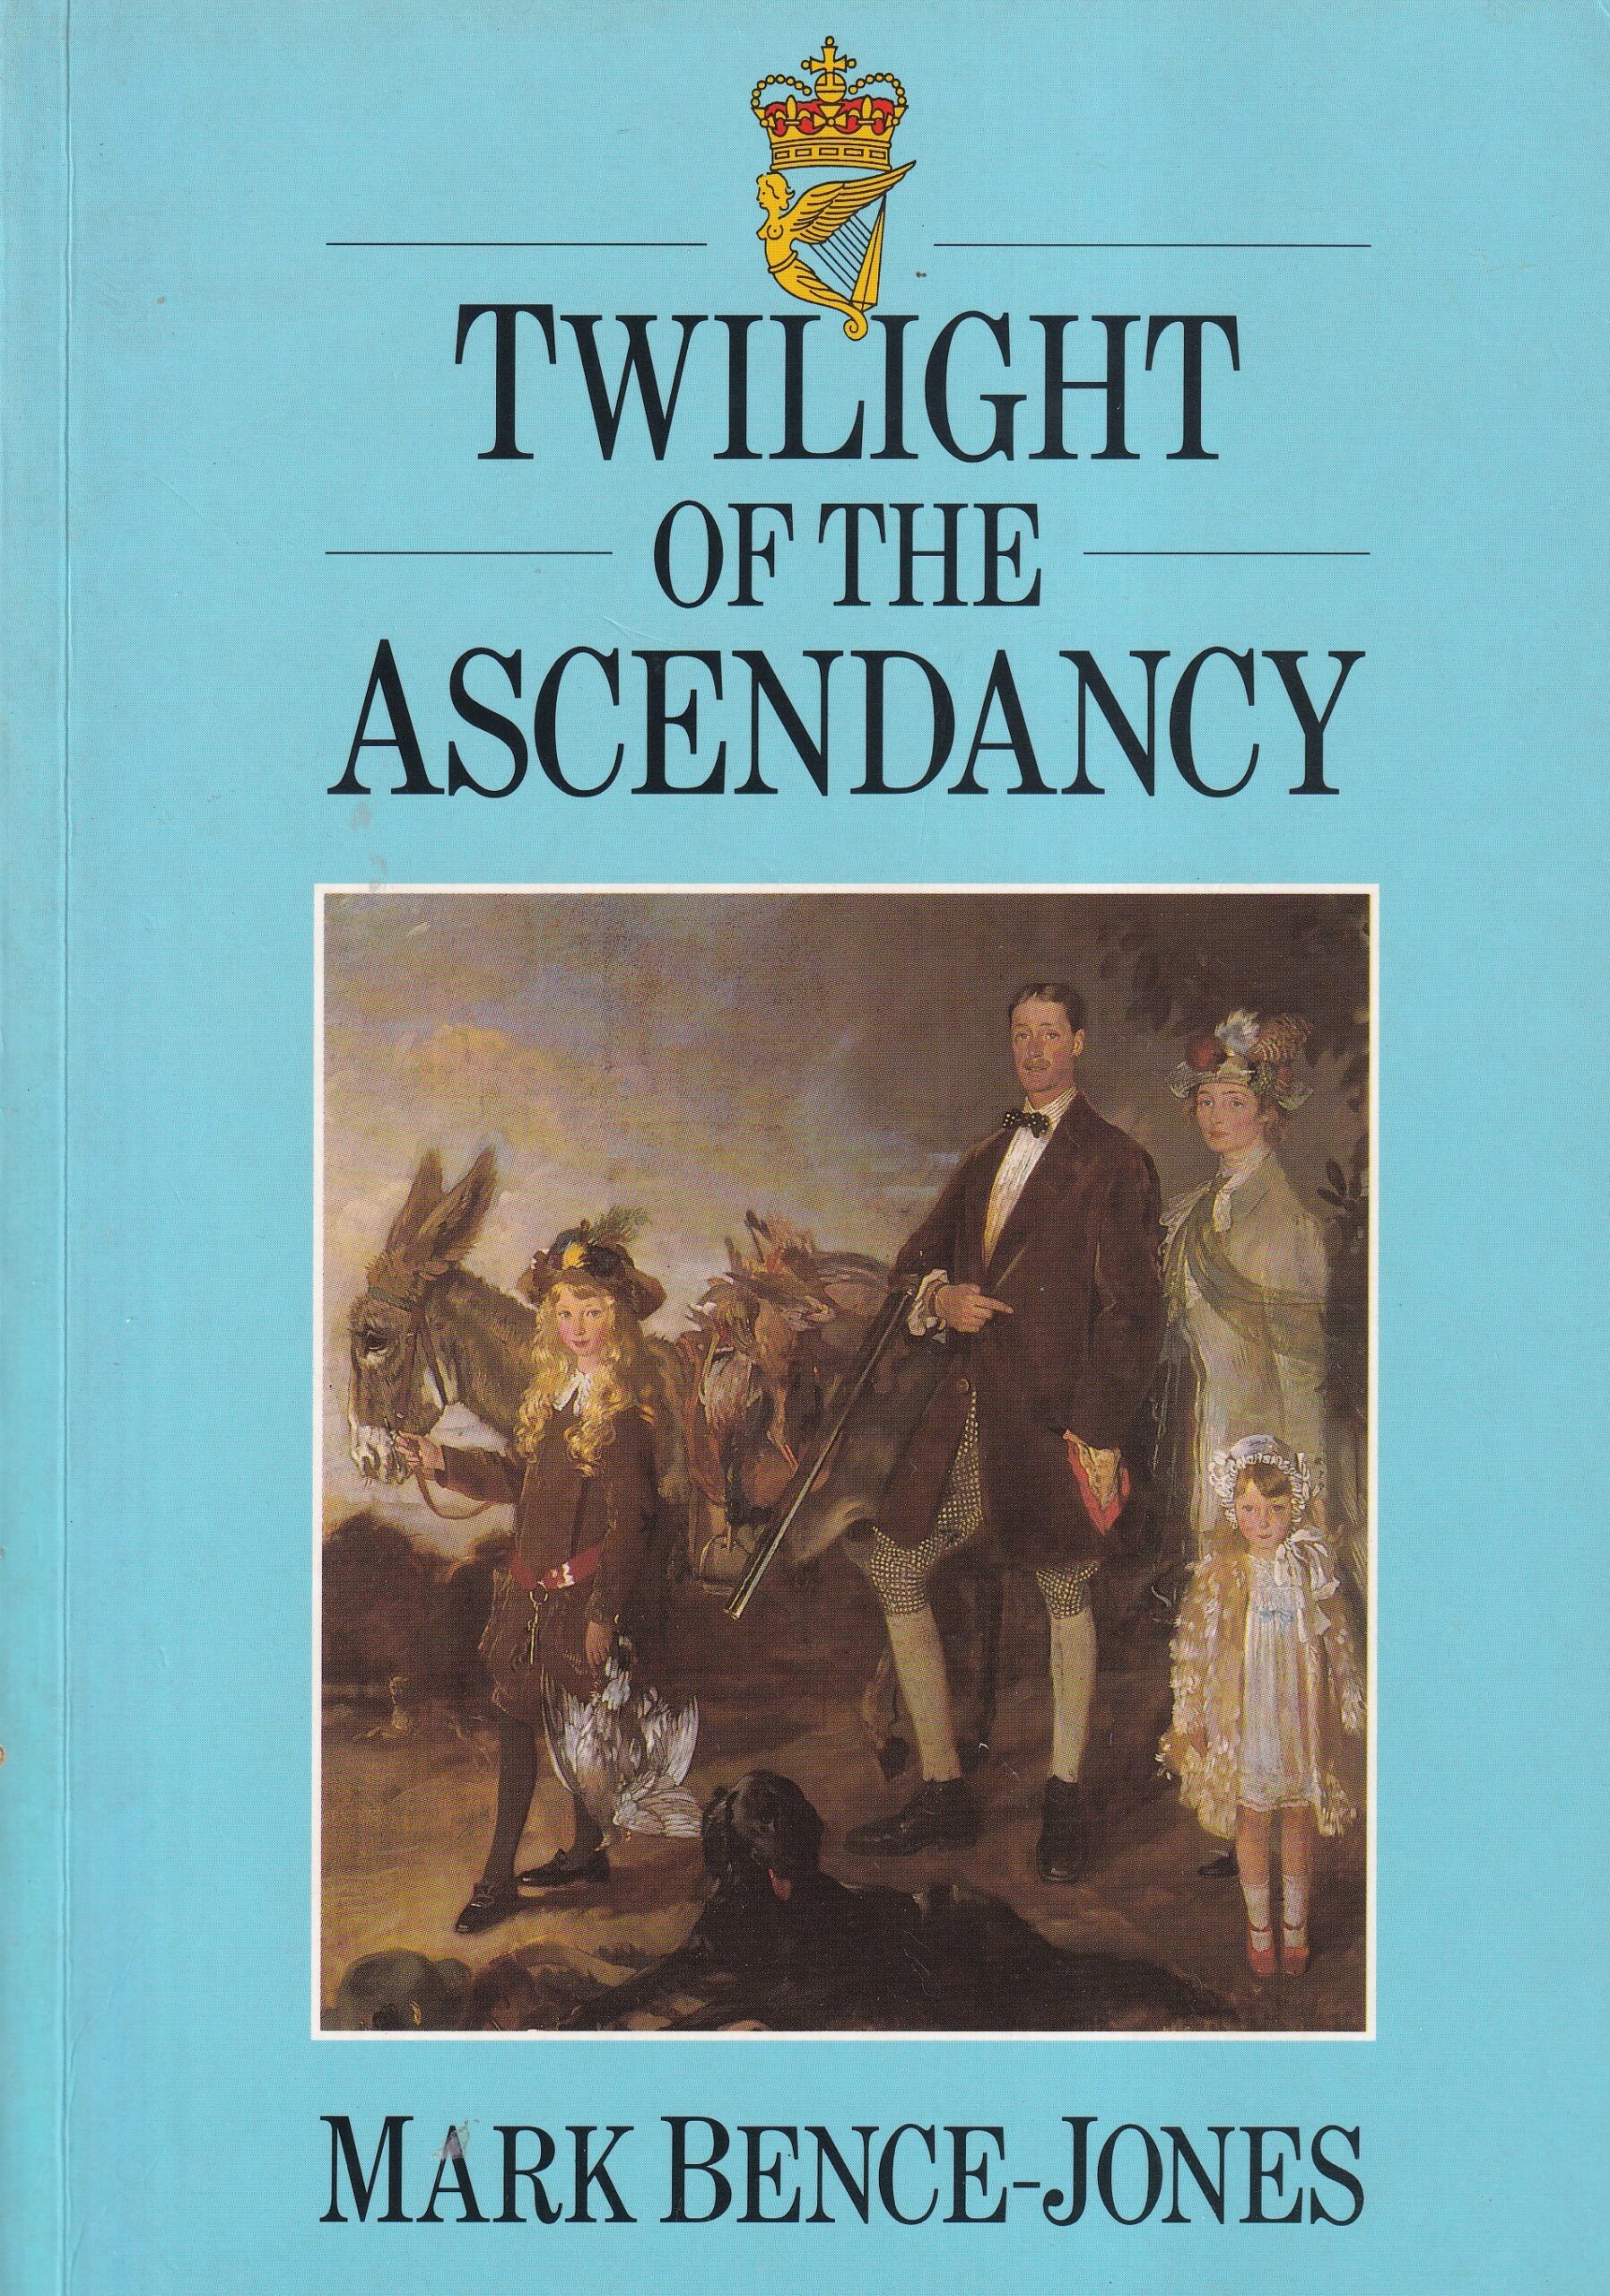 Twilight of the Ascendancy by Mark Bence-Jones